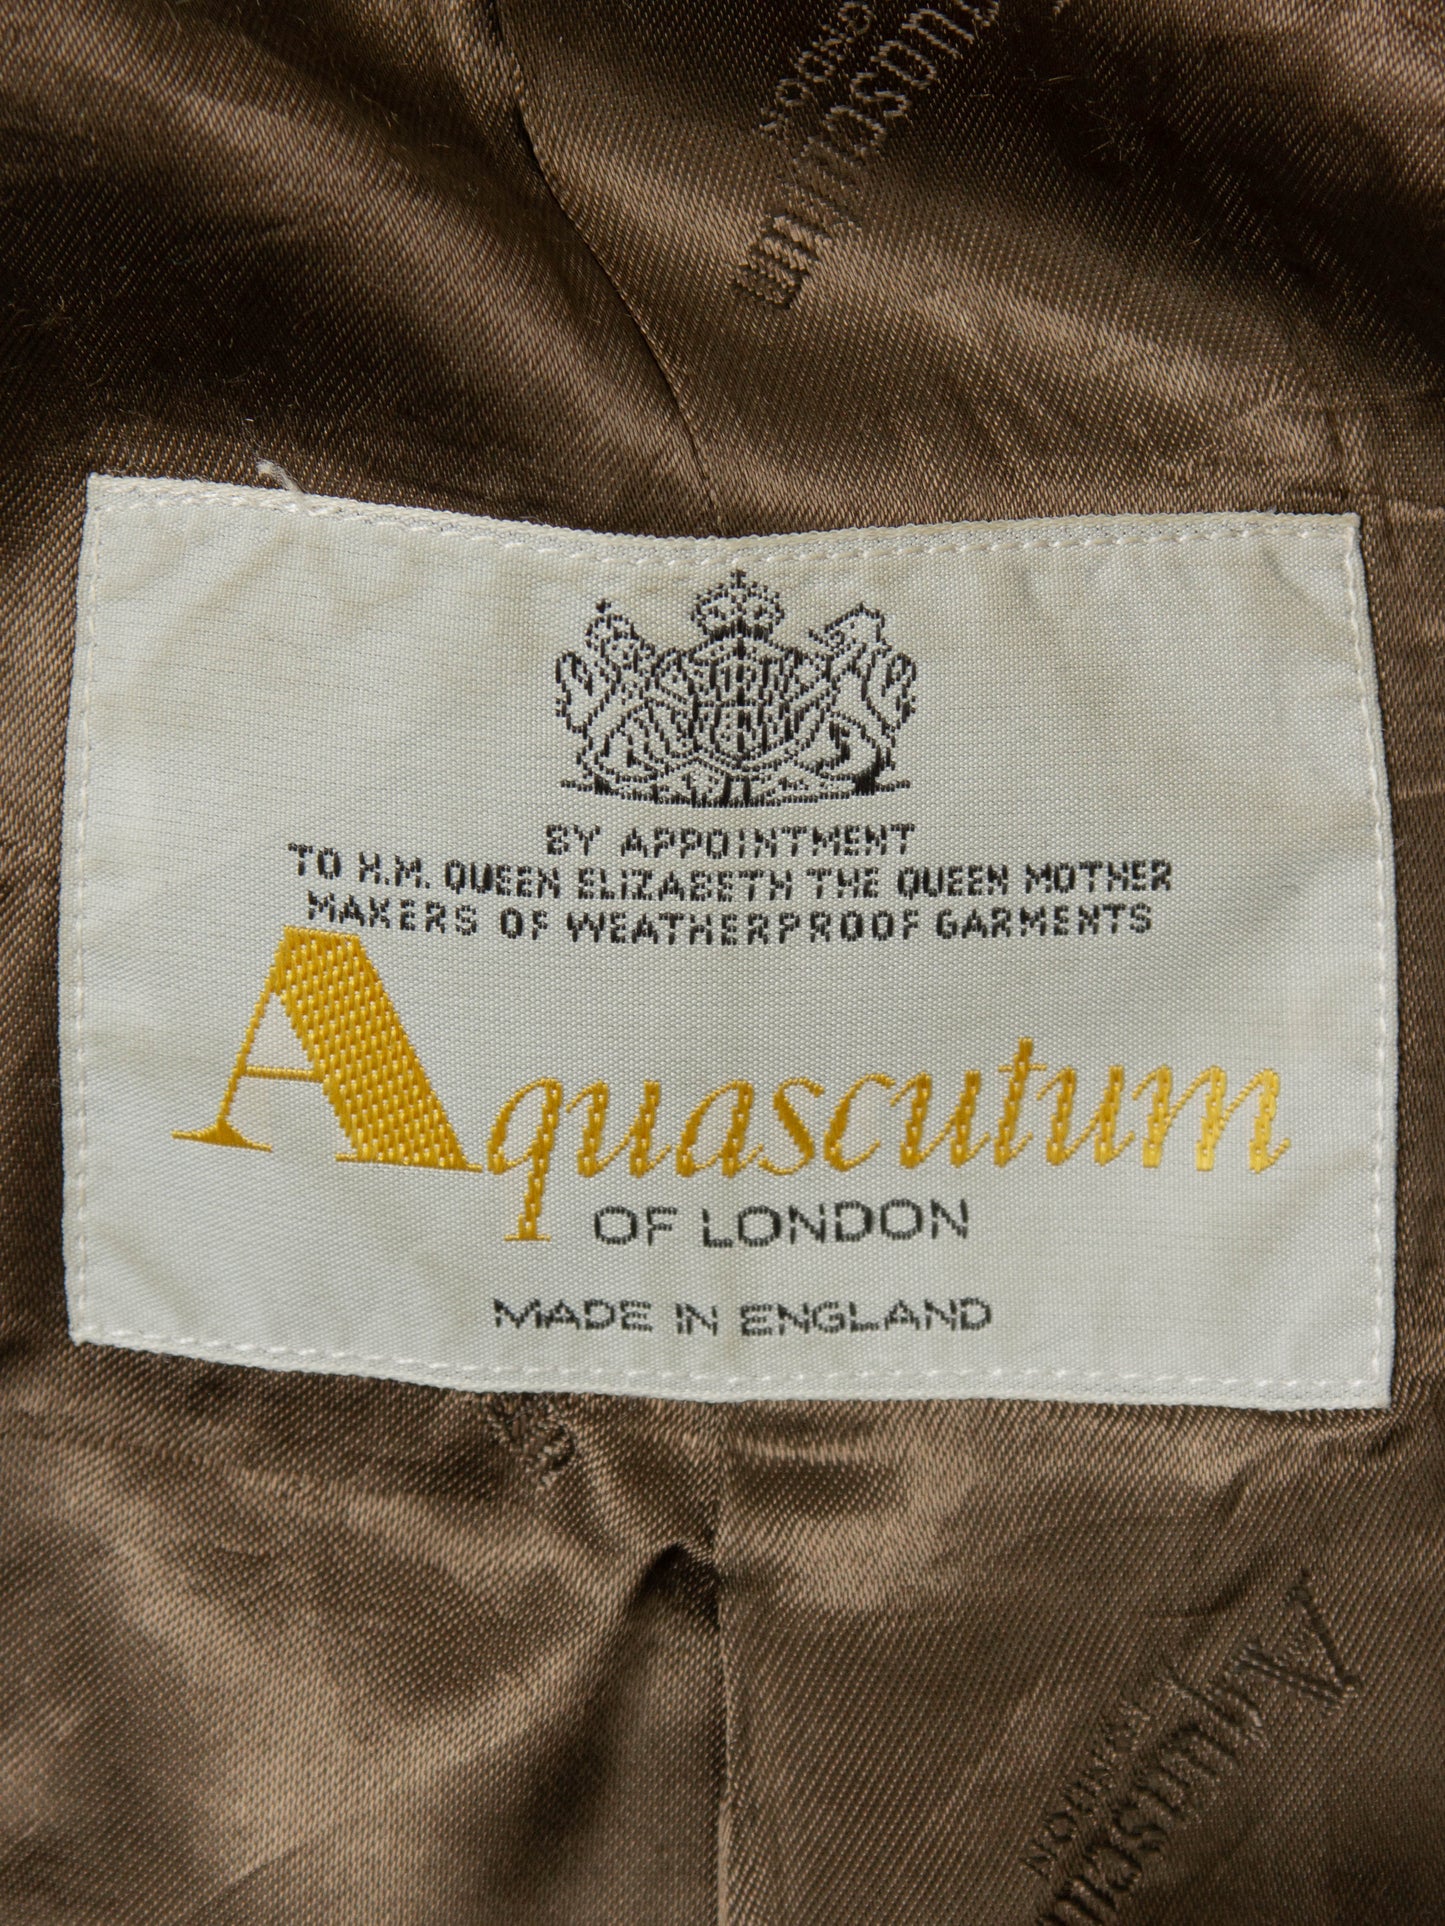 Vtg 1980s Aquascutum Raglan Wool Coat (M)